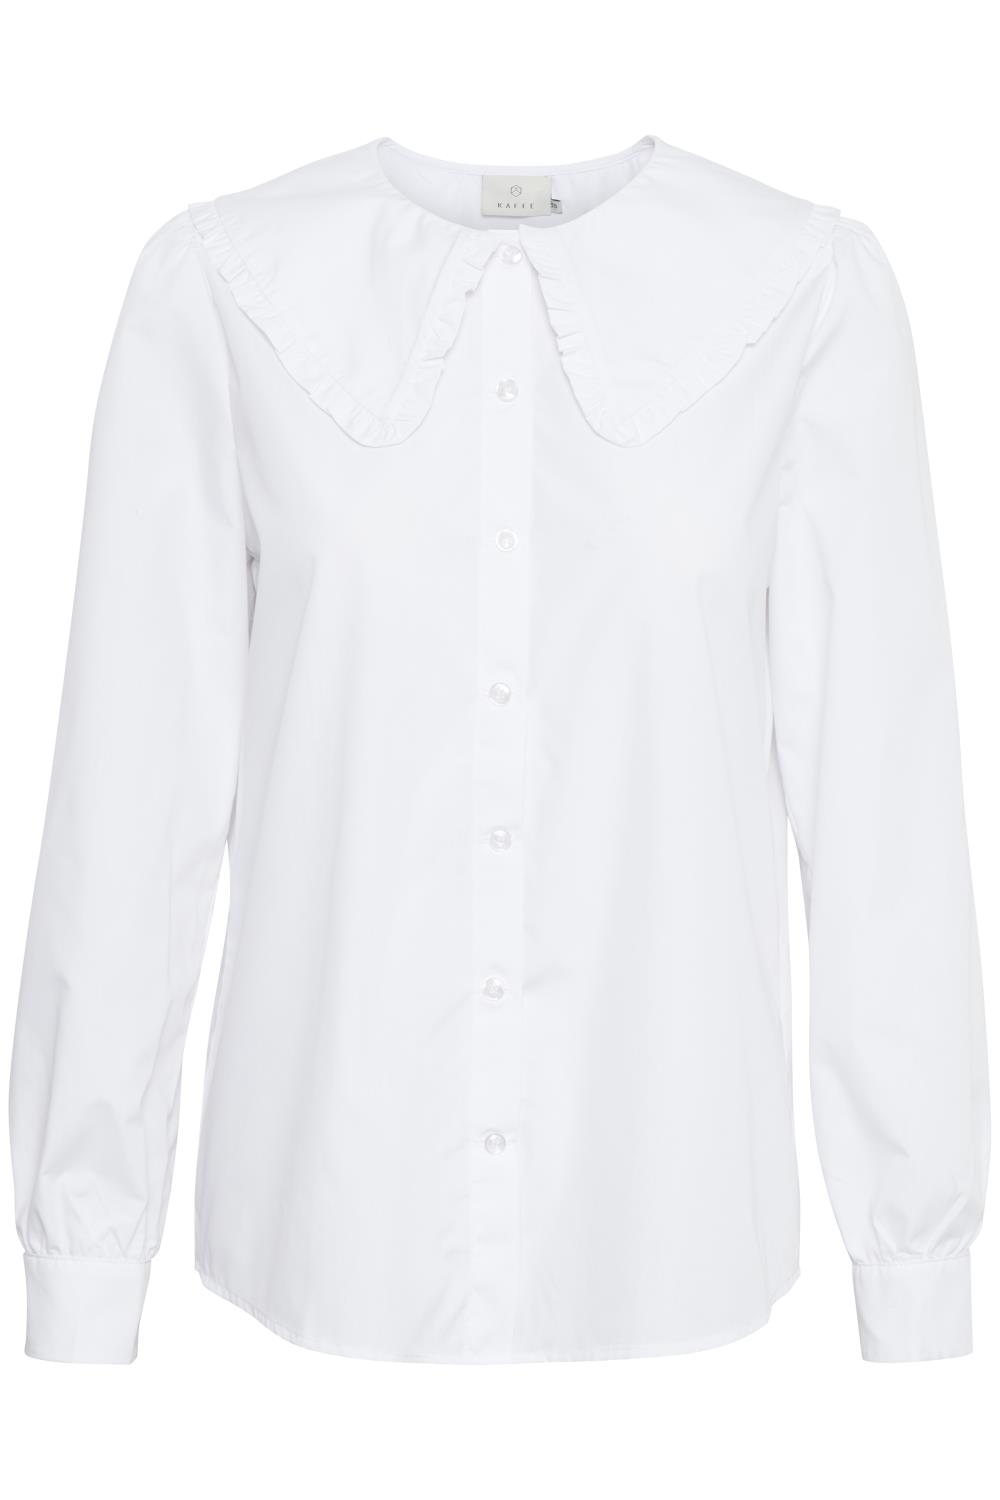 Kaffe Luna LS shirt, optical white